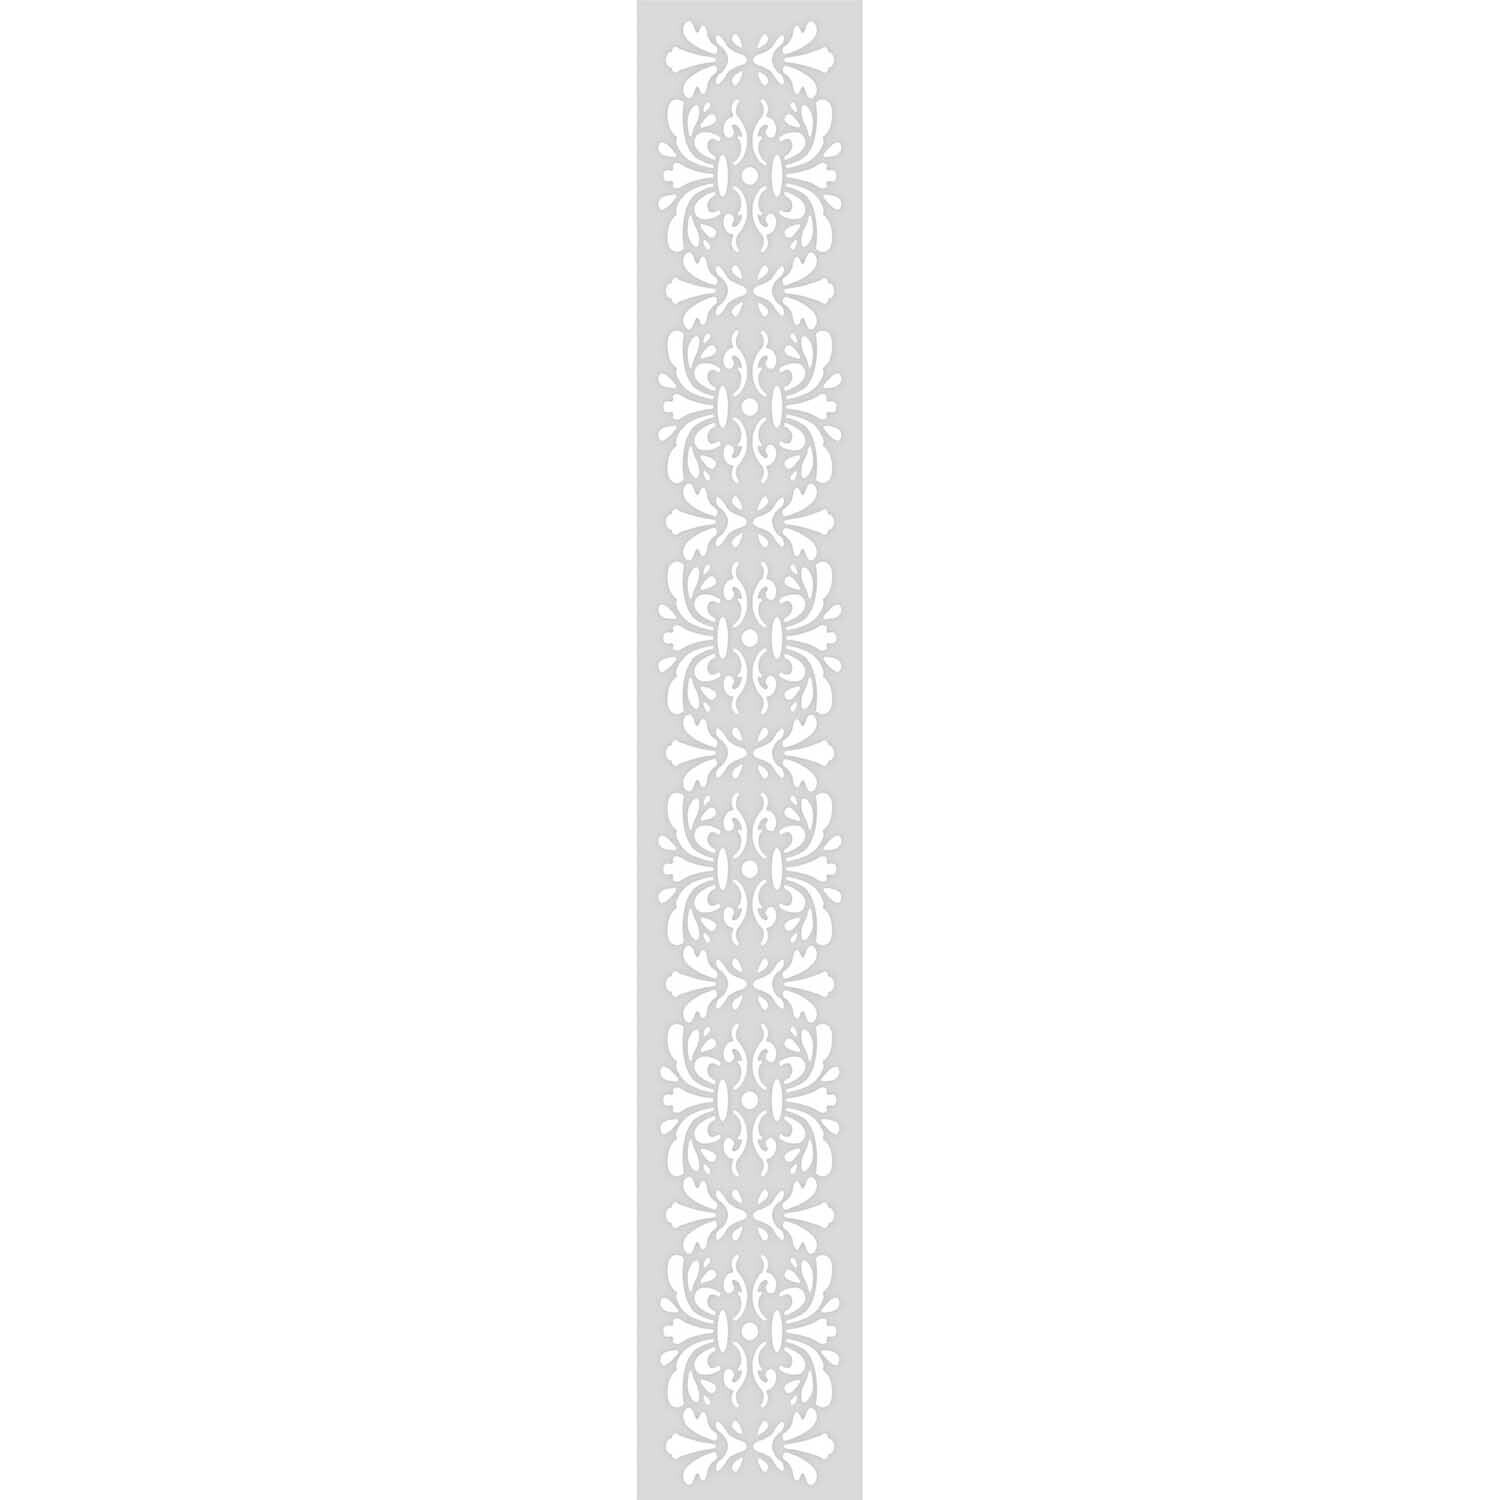 Schablone Ornamentbordüre 10,5x70cm selbstklebend